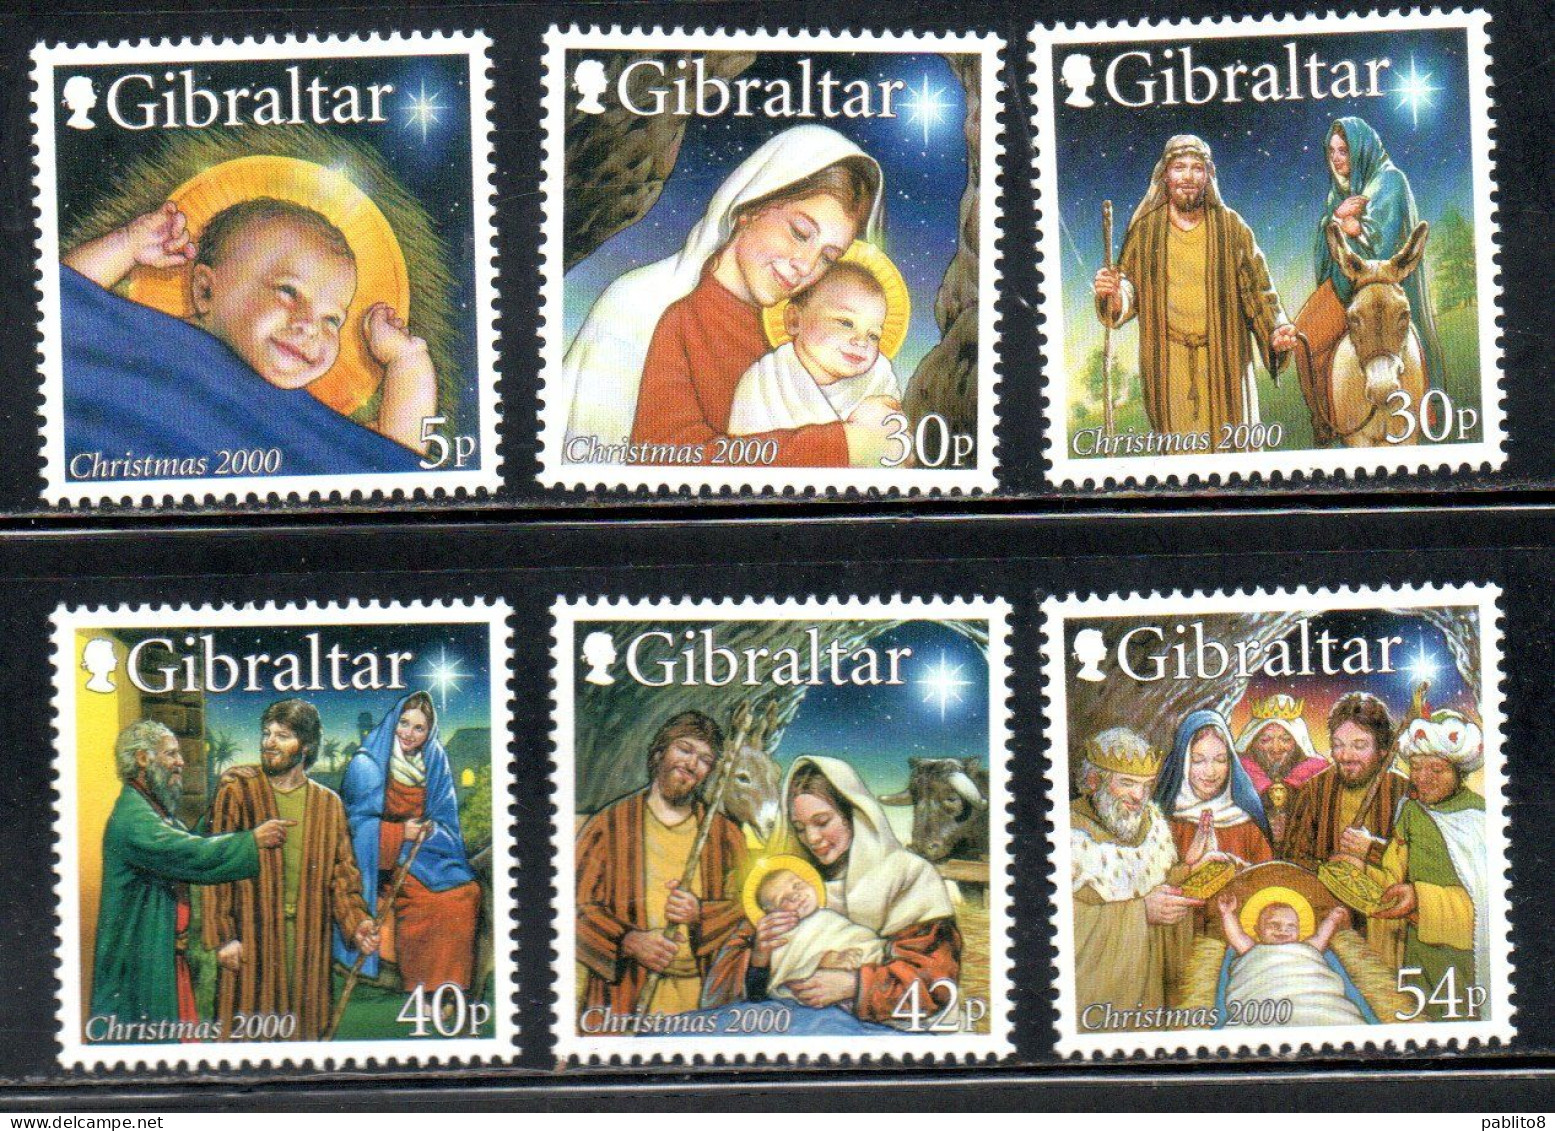 GIBRALTAR GIBILTERRA 2000 CHRISTMAS NATALE NOEL WEIHNACHTEN NAVIDAD SERIE COMPLETA COMPLETE SET MNH - Gibraltar